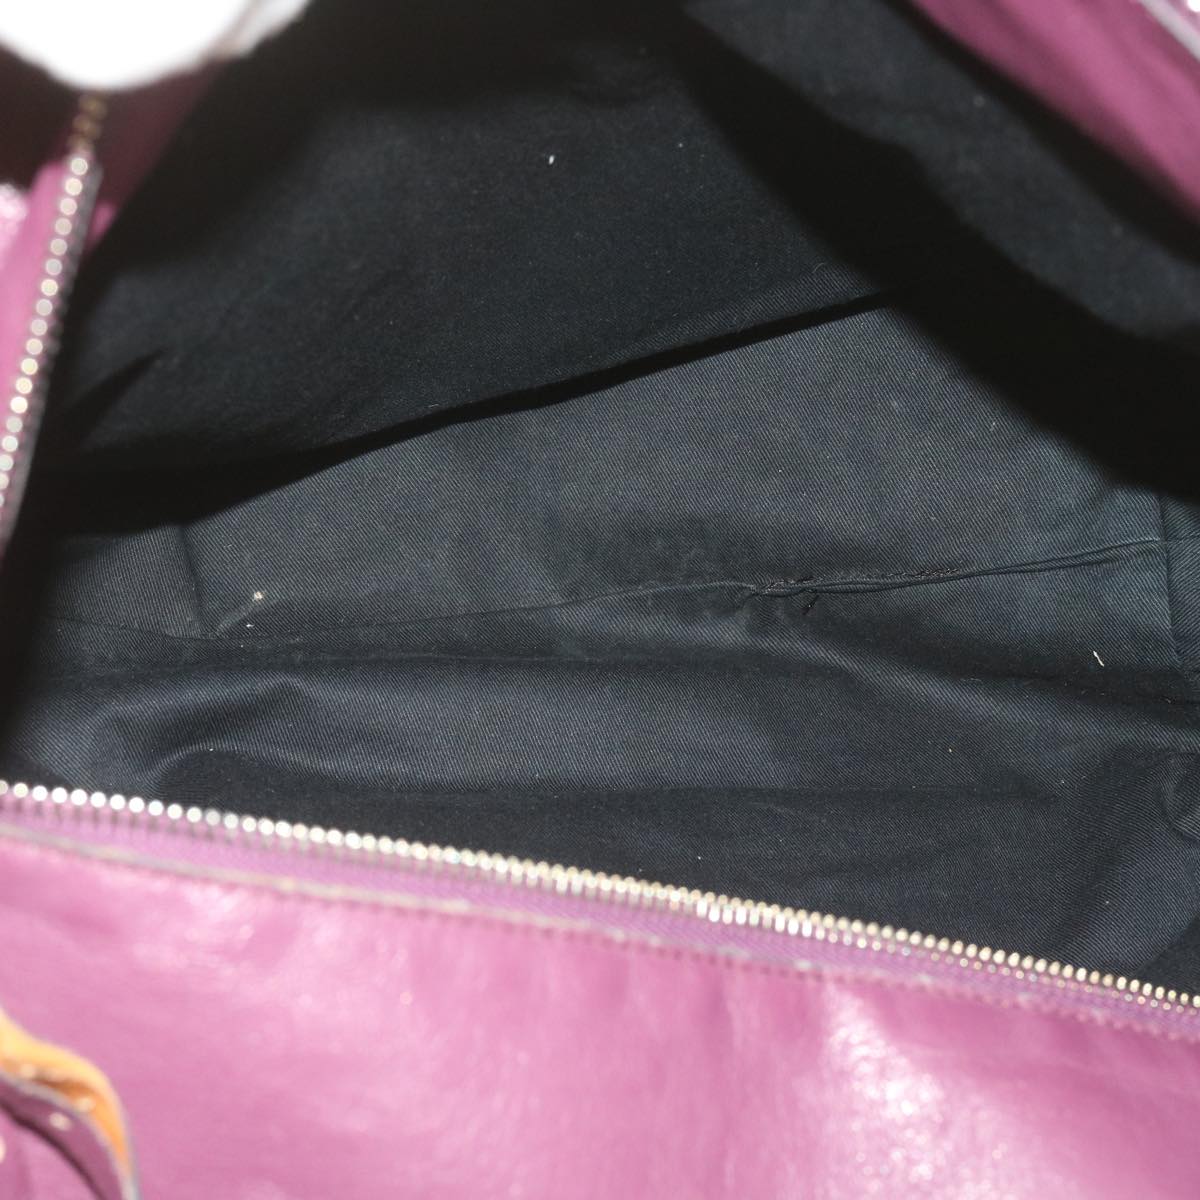 Chloe Wallet Hand Bag Leather 4Set Black Purple Brown Auth bs12169